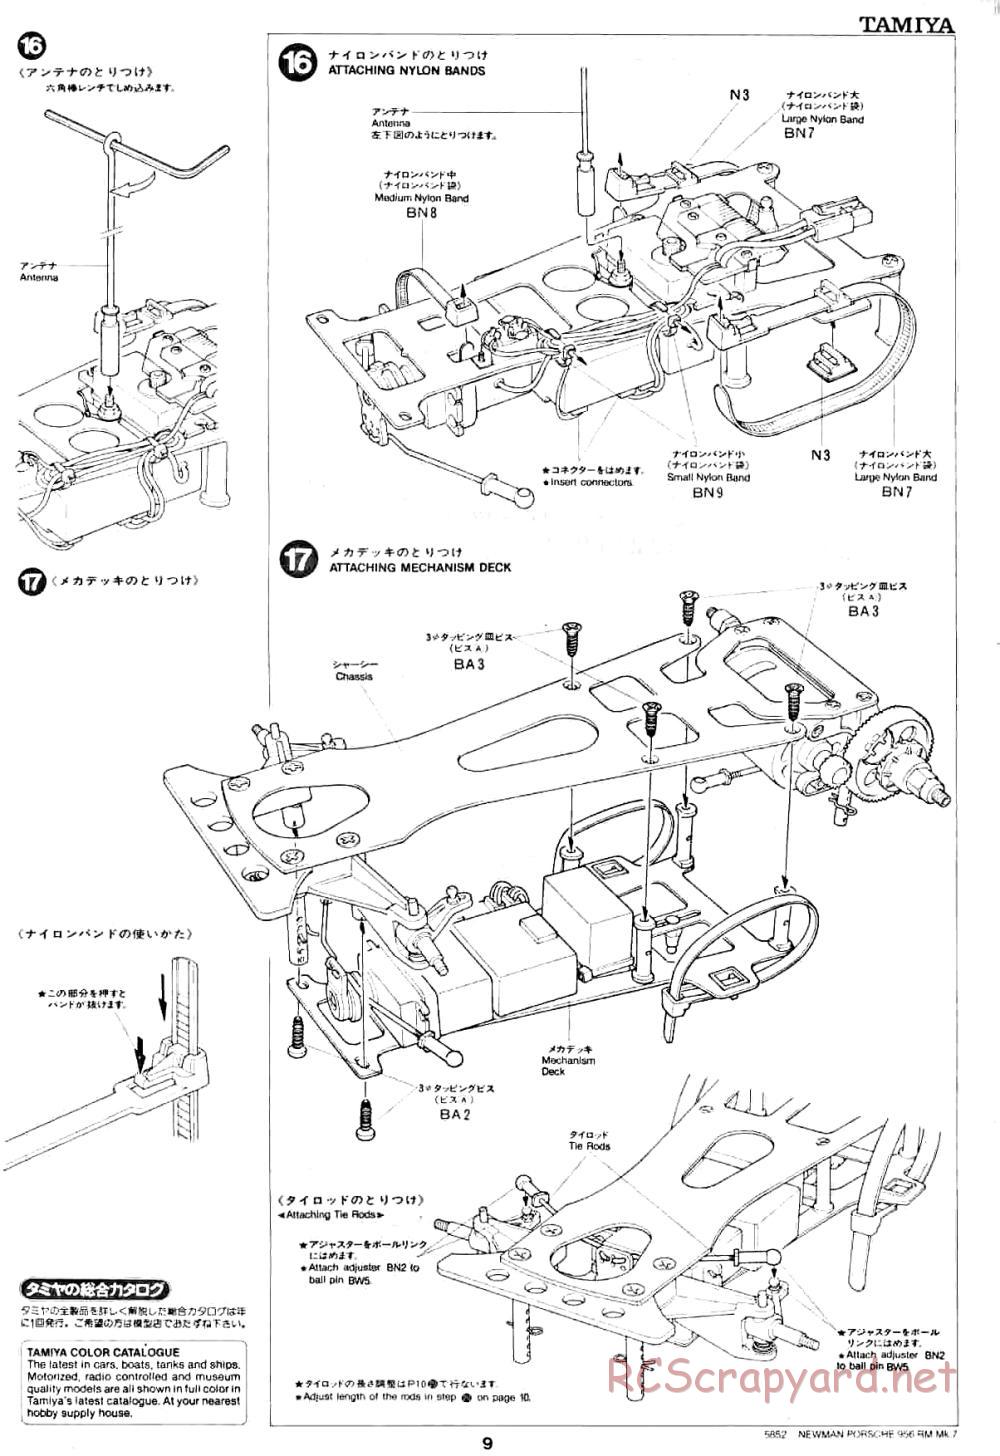 Tamiya - Newman Prsch 956 - RM MK.7 - 58052 - Manual - Page 9